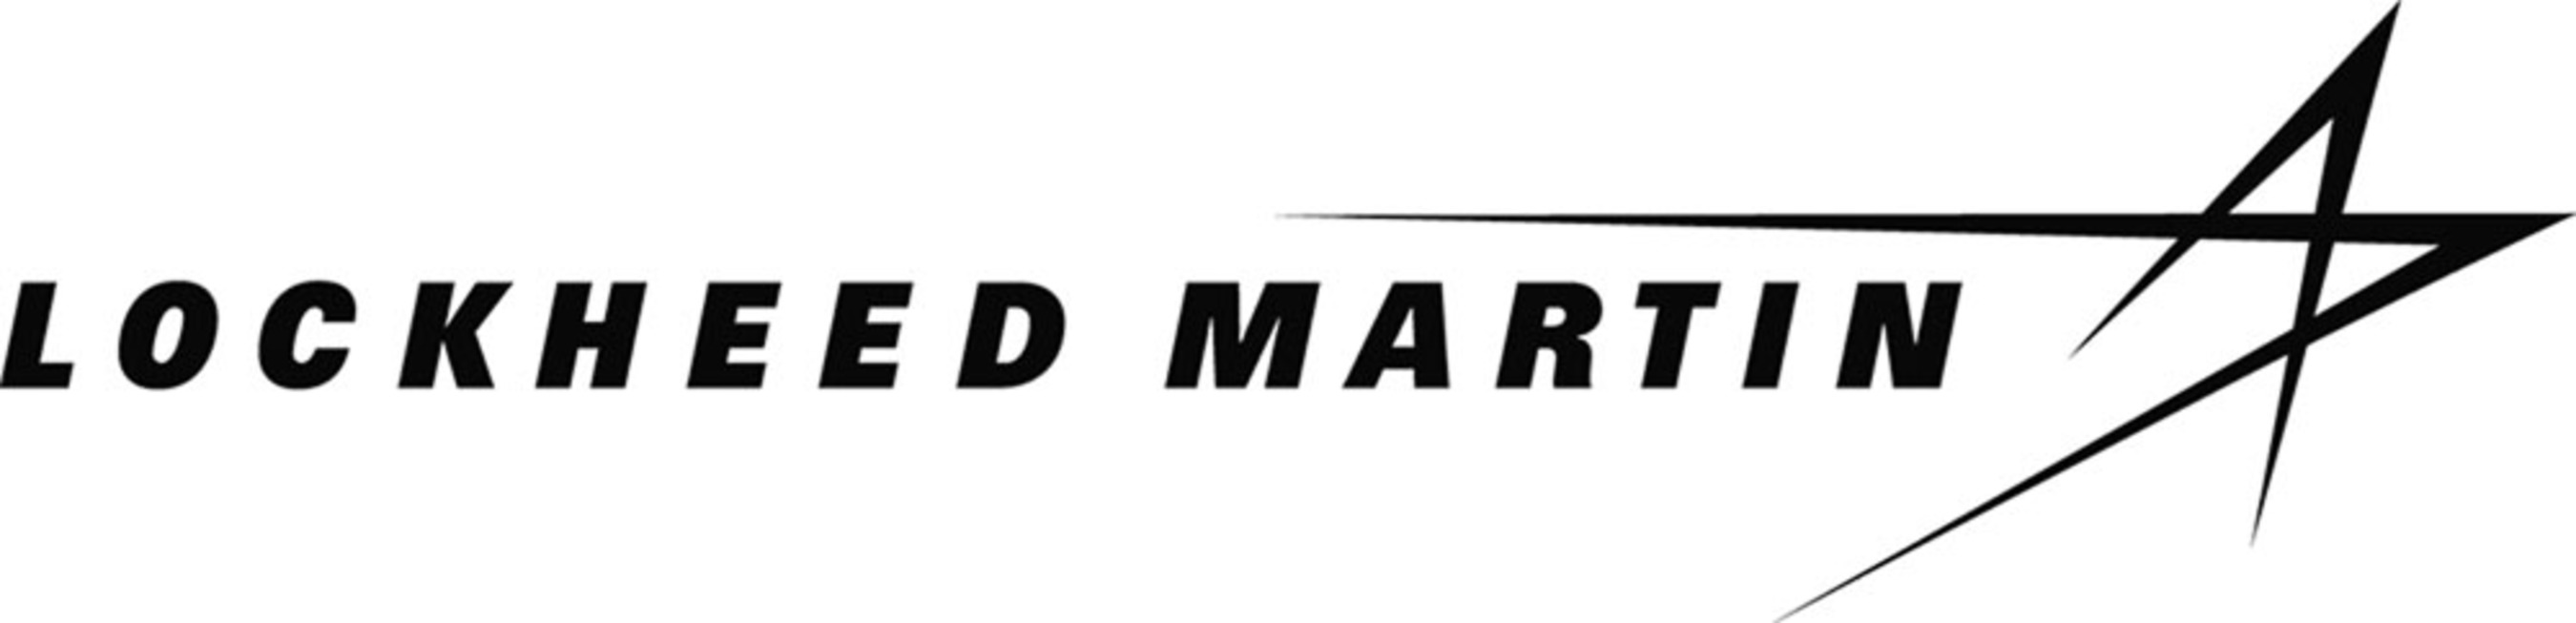 Lockheed Martin Corporation. (PRNewsFoto/Lockheed Martin) (PRNewsFoto/)